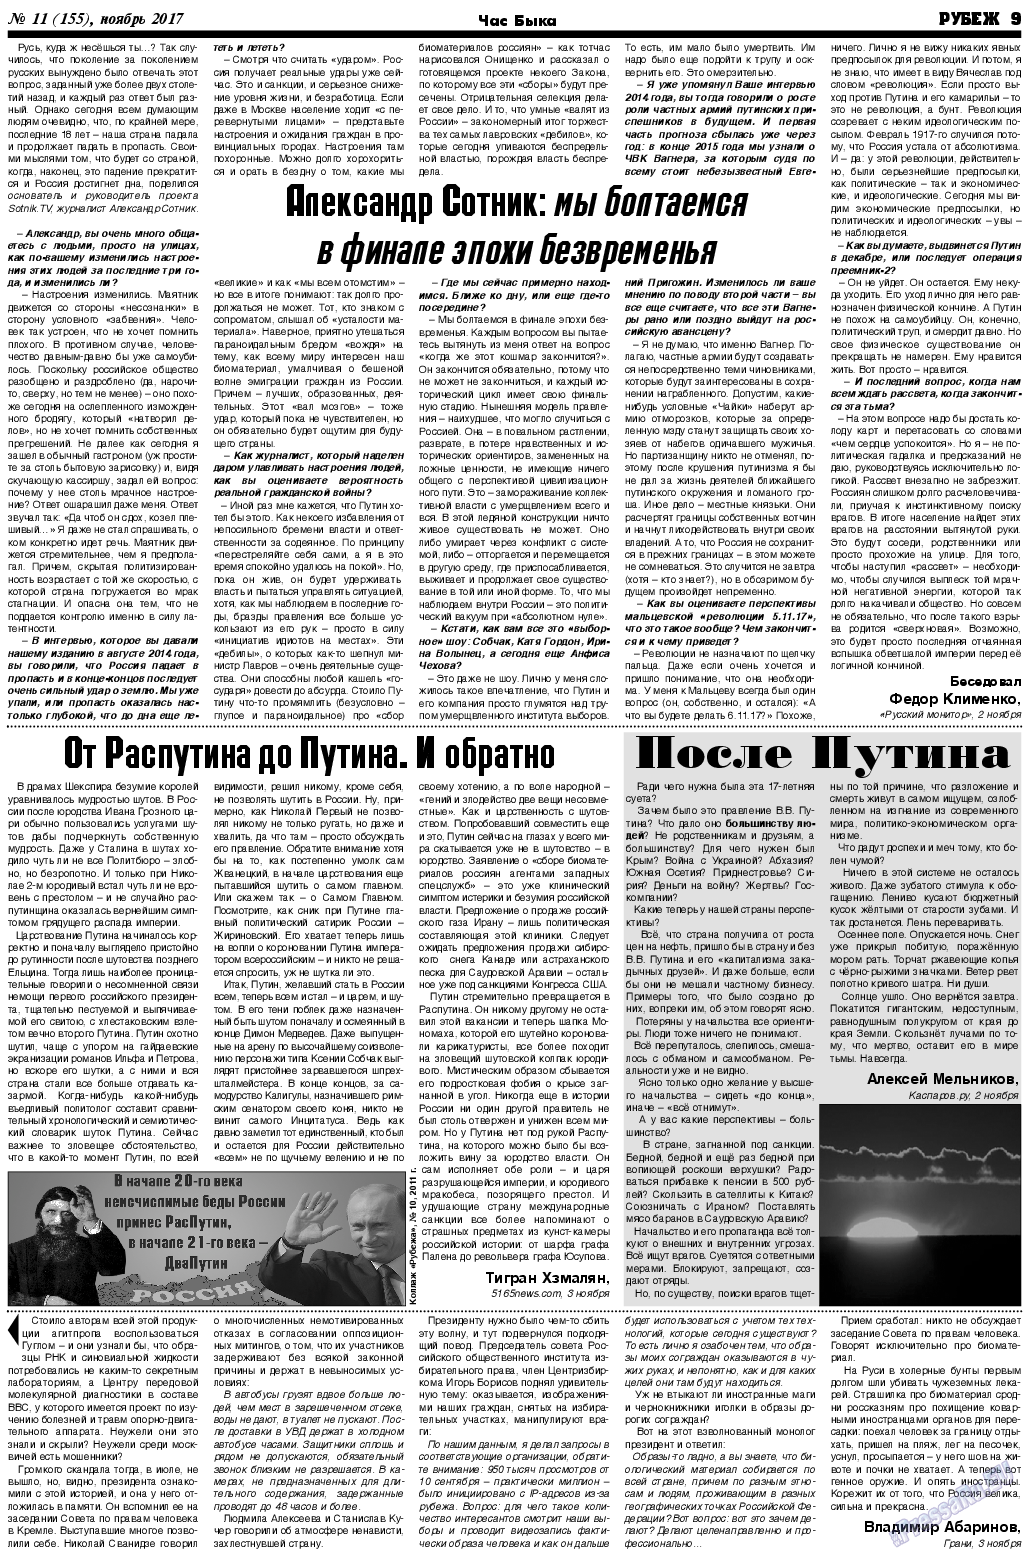 Рубеж, газета. 2017 №11 стр.9